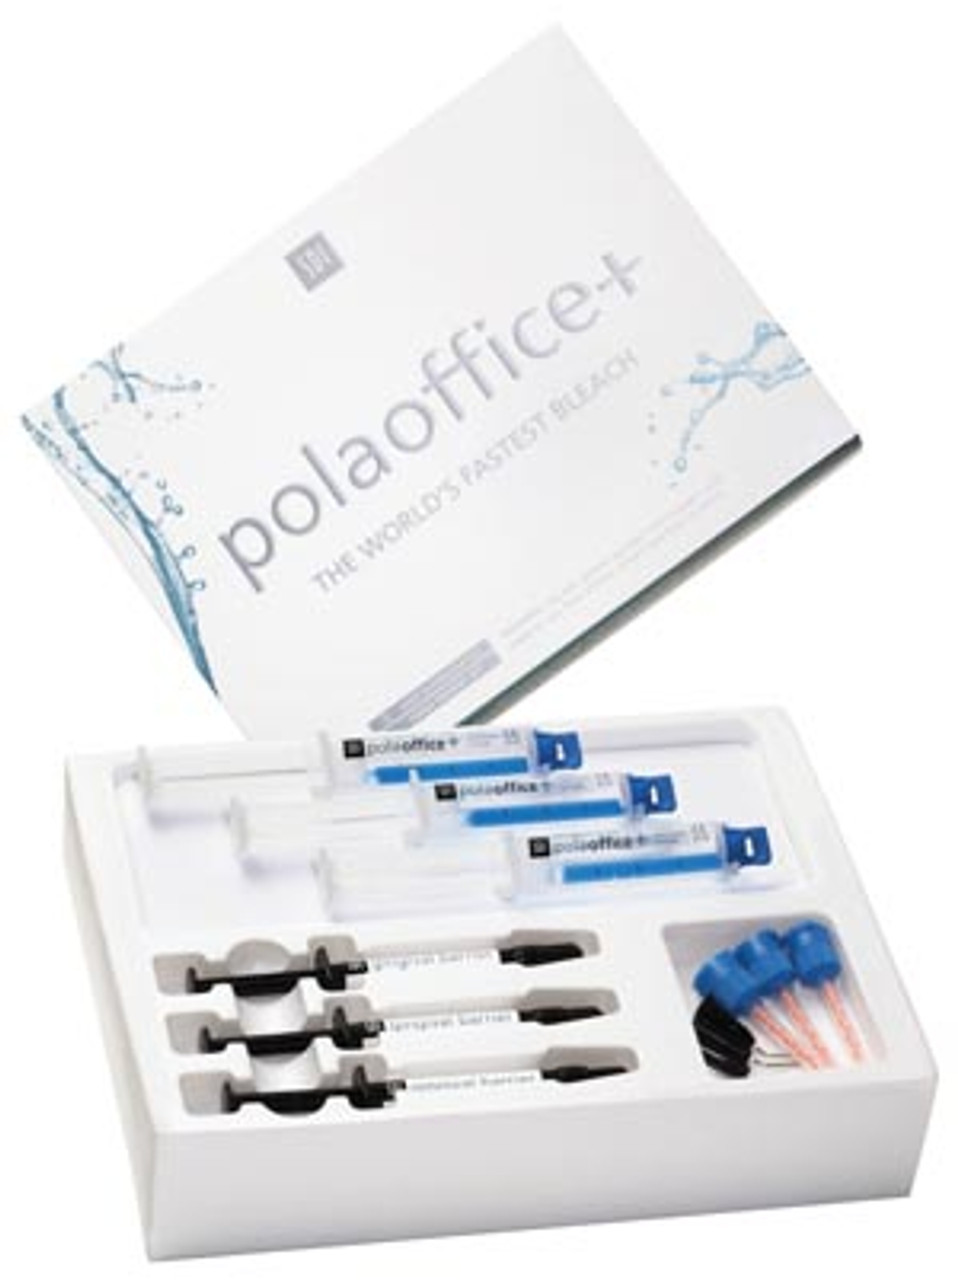 SDI Pola Office+, 3 Patient Kit, 37.5% Hydrogen Peroxide 7700415